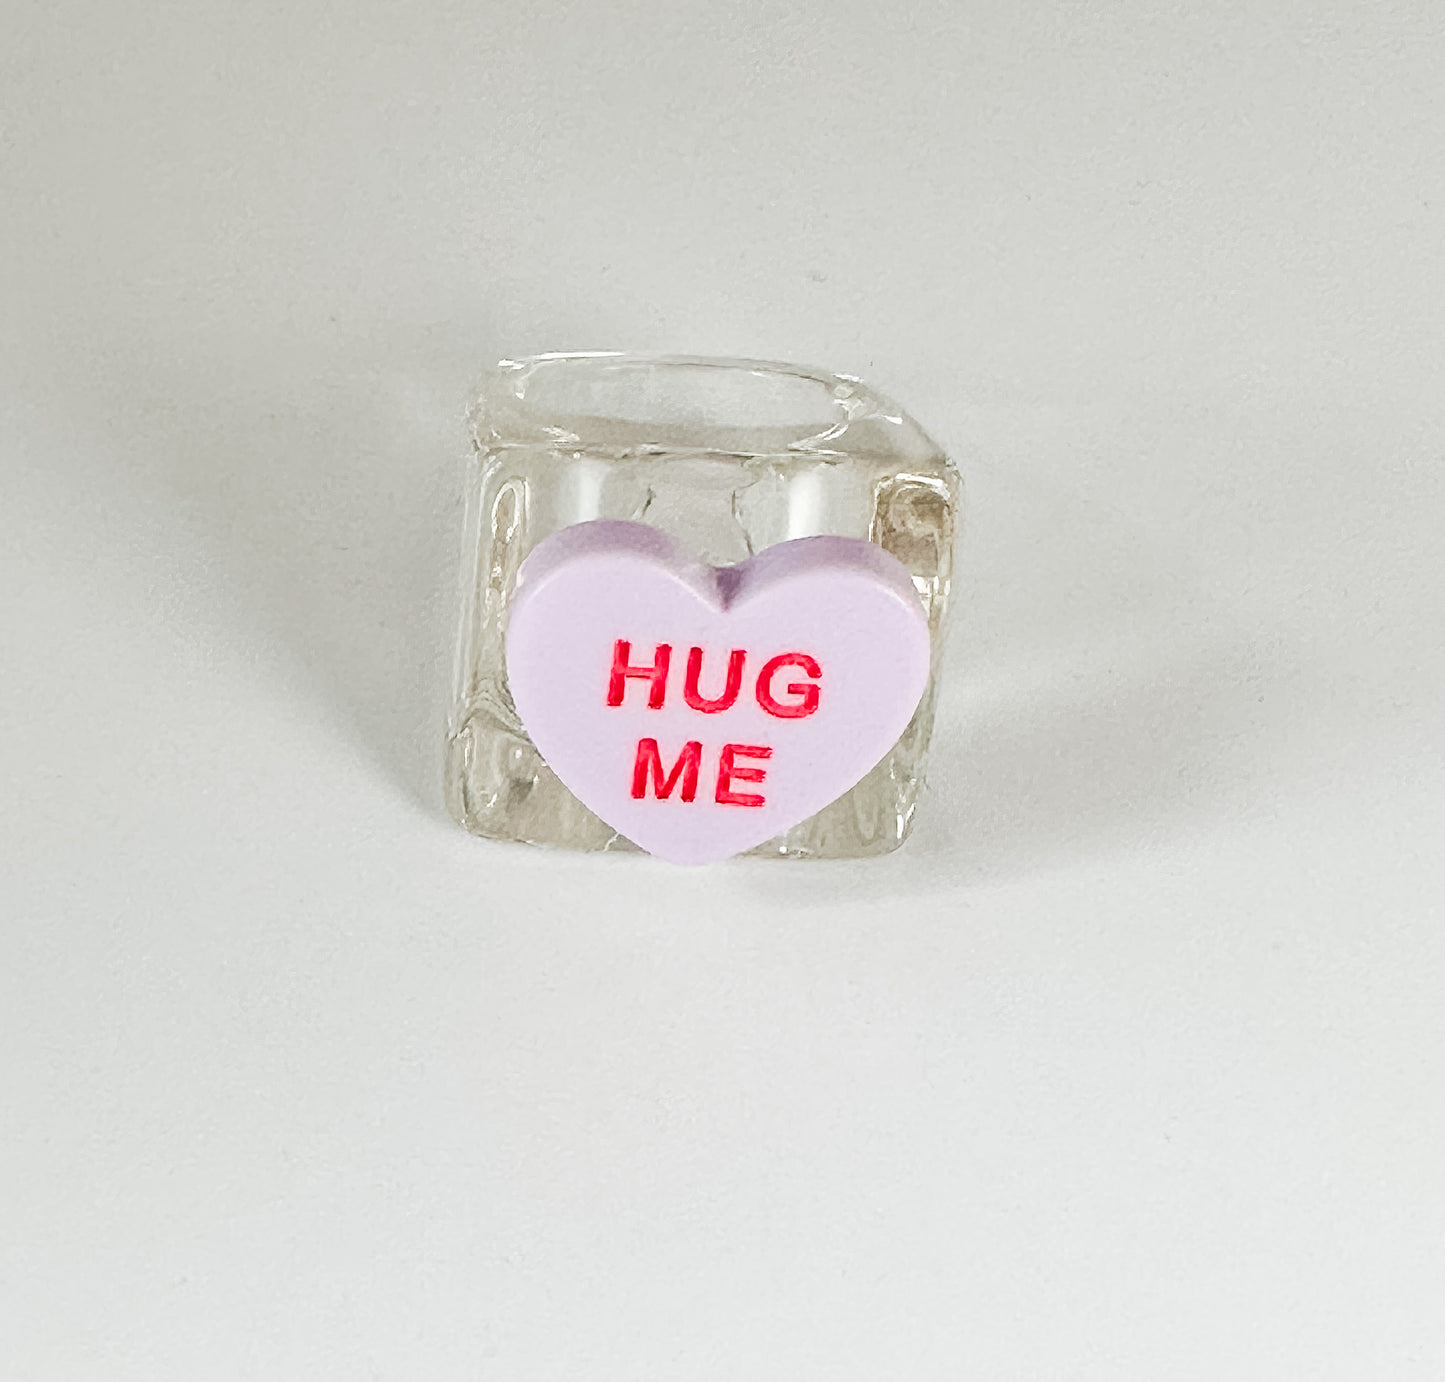 HUG ME RING